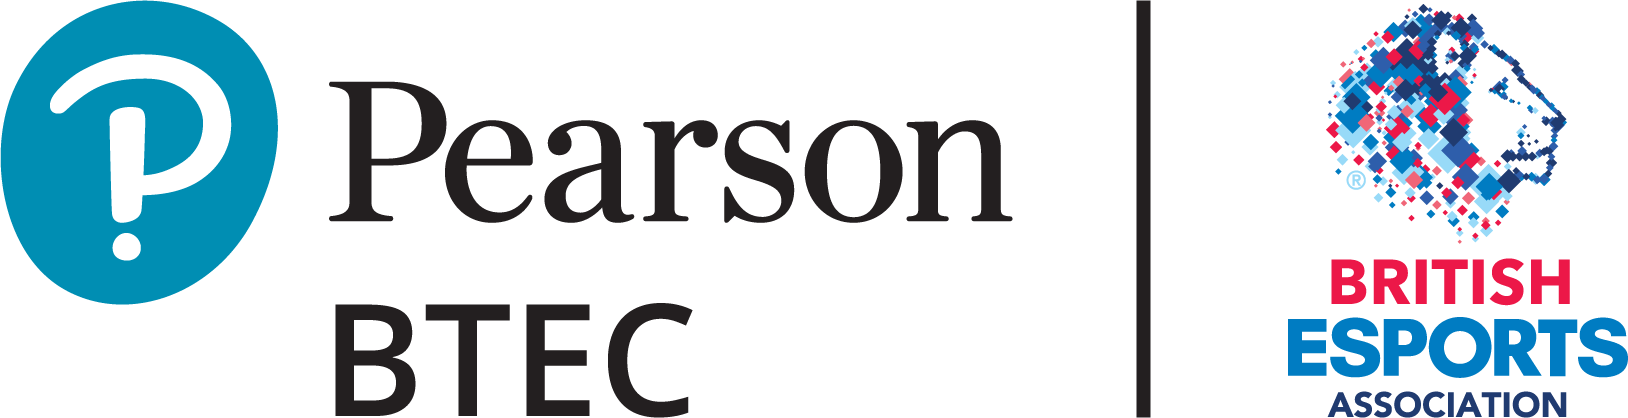 Pearson BTEC And British Esports Association